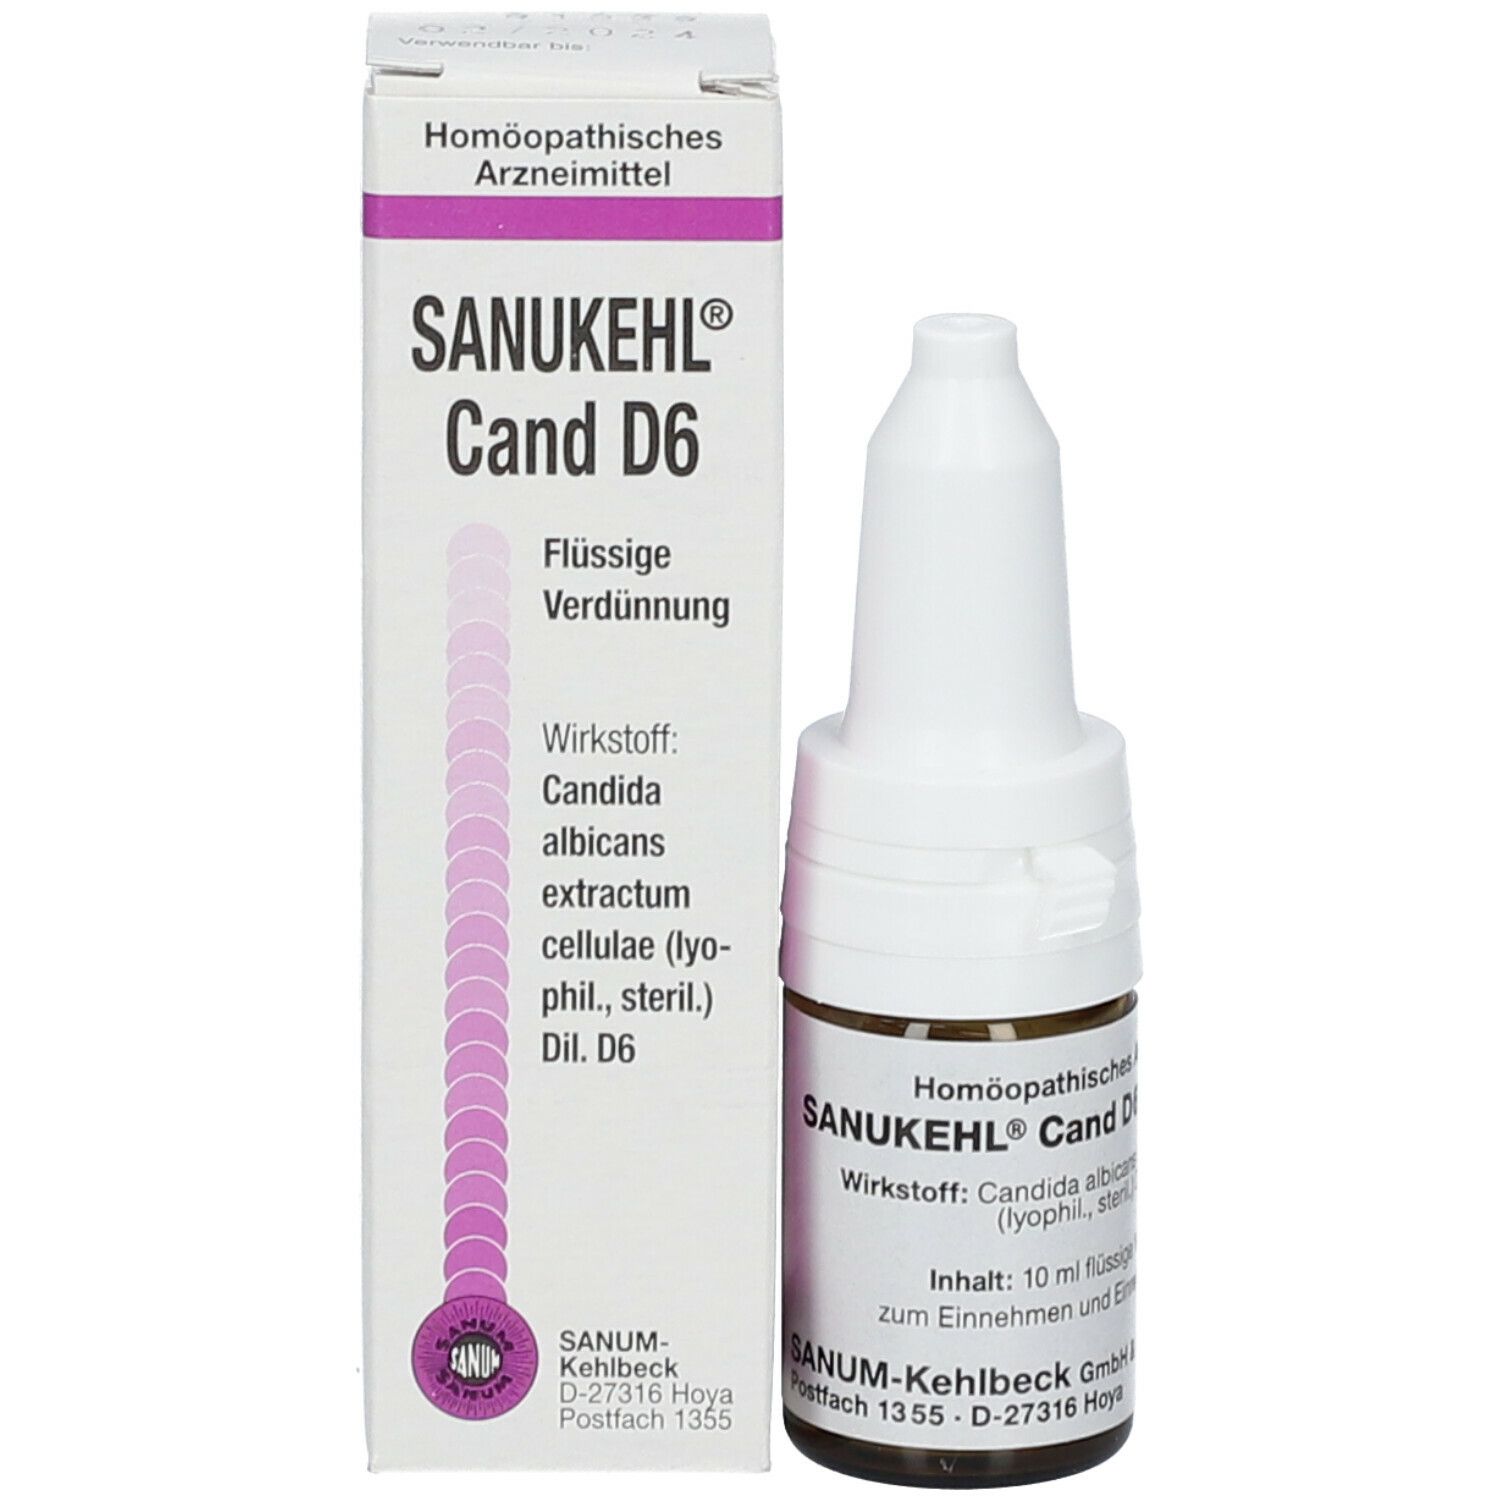 Sanukehl® Cand D6 Tropfen